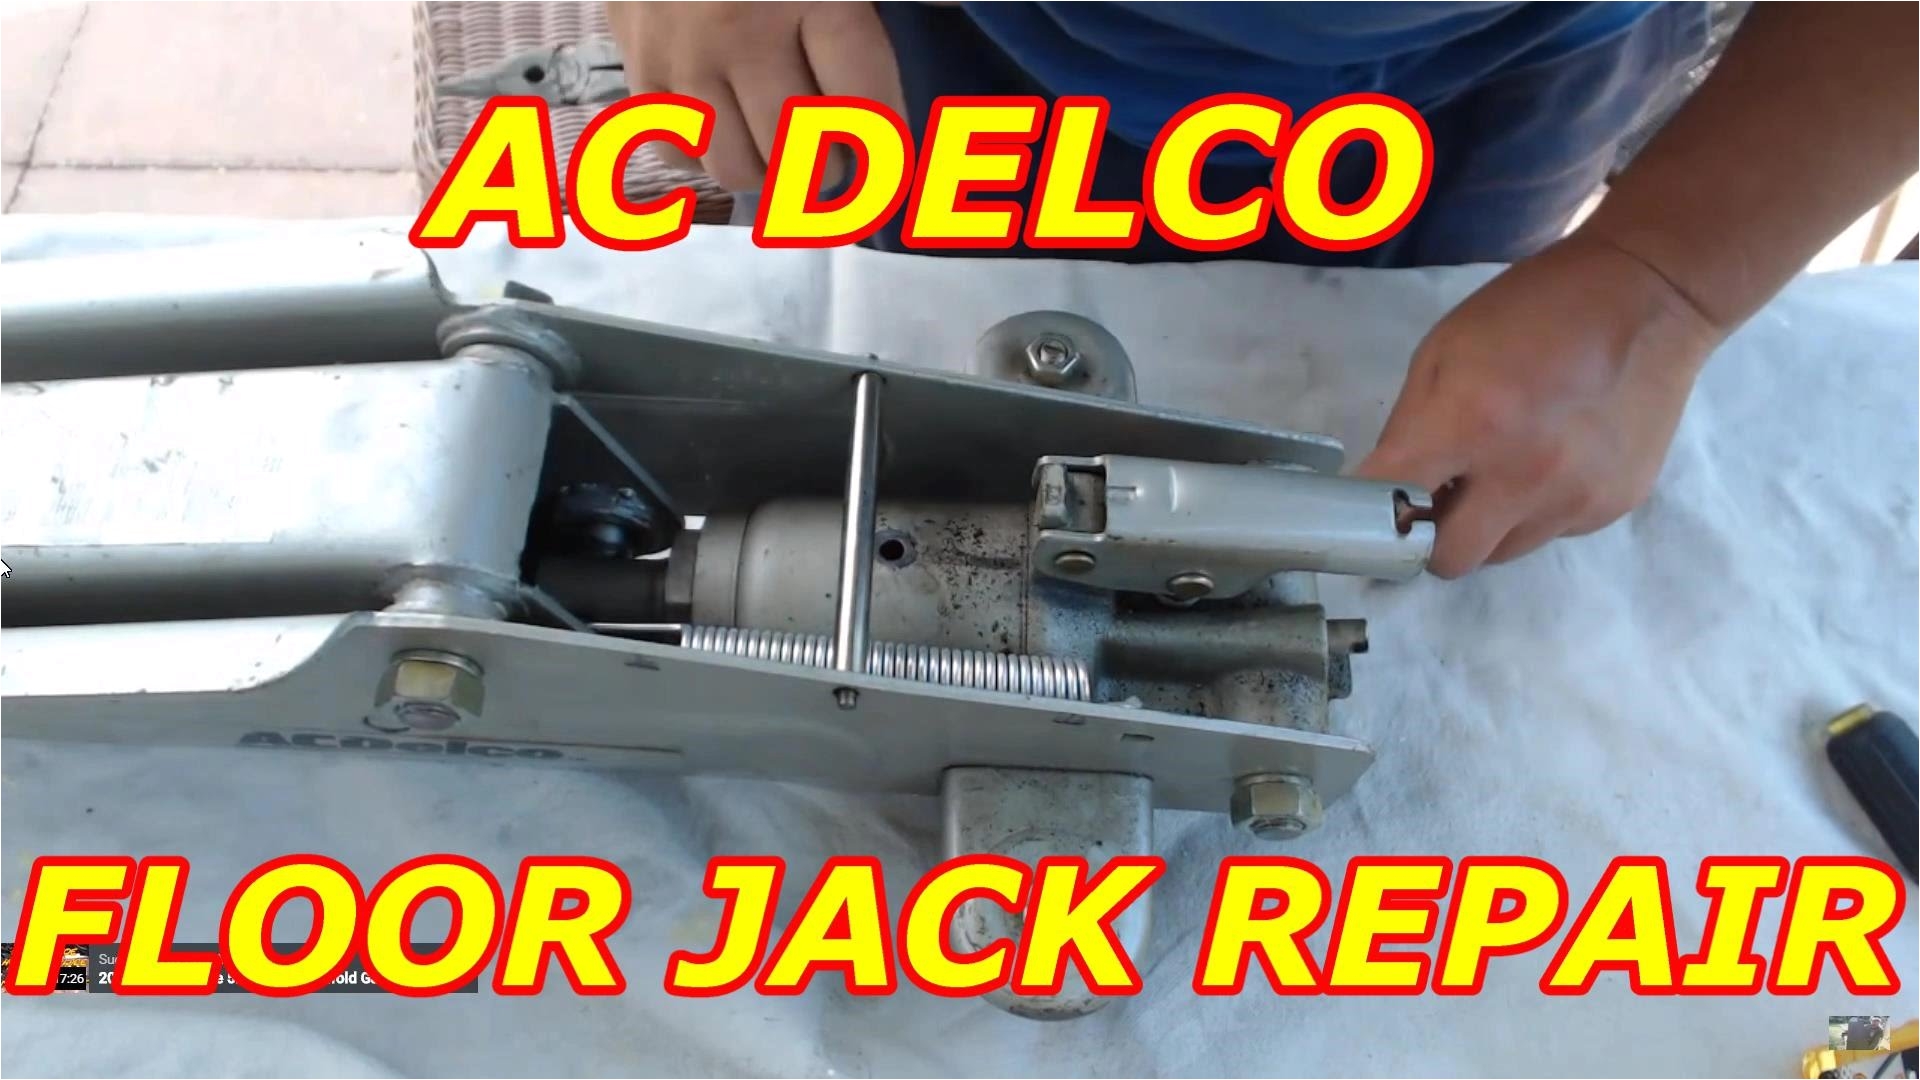 ac delco floor jack repair